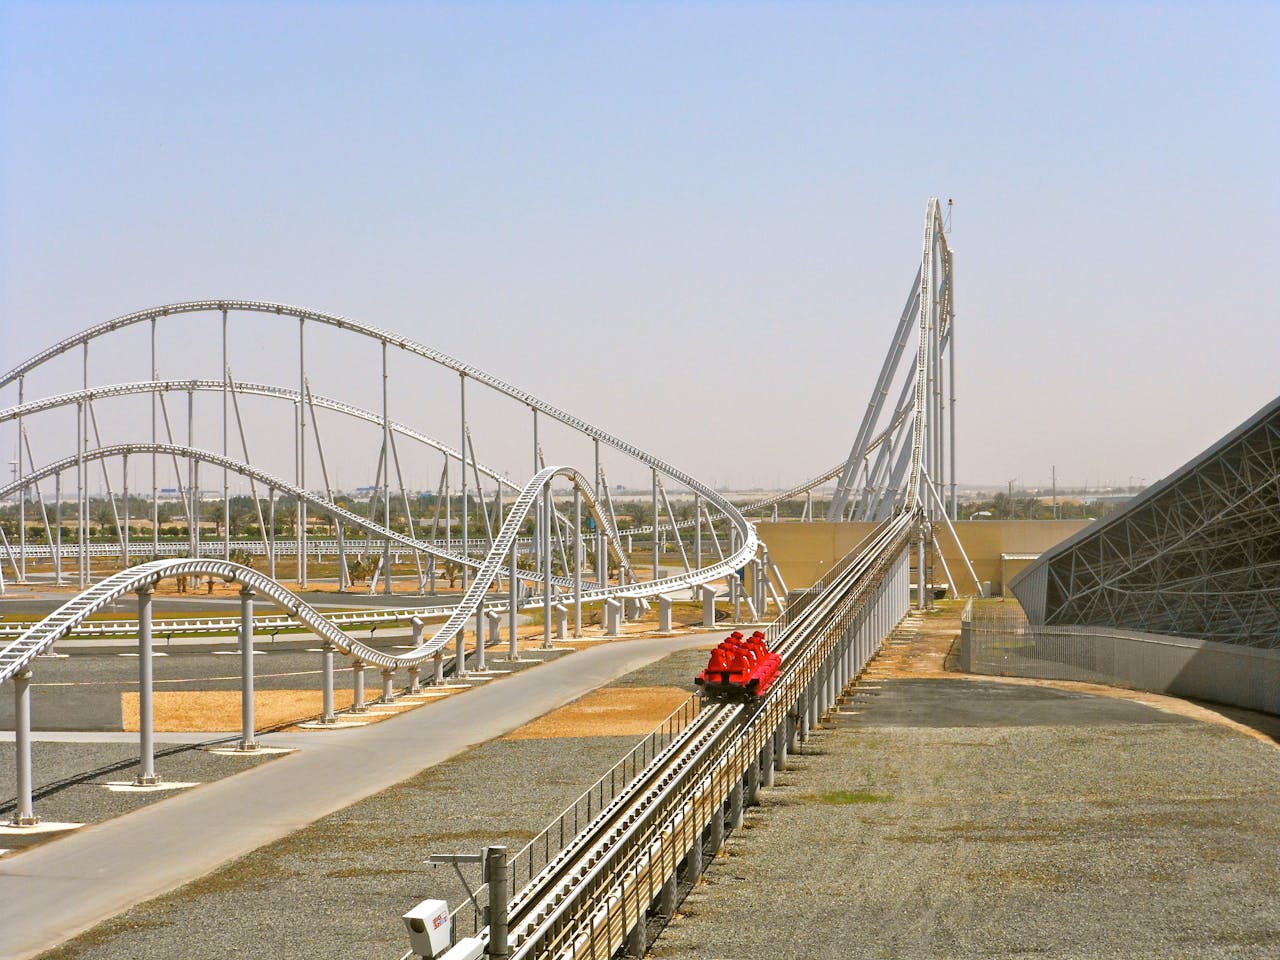 De achtbaan Formula Rossa in attractiepark Ferrari World in Abu Dhabi.